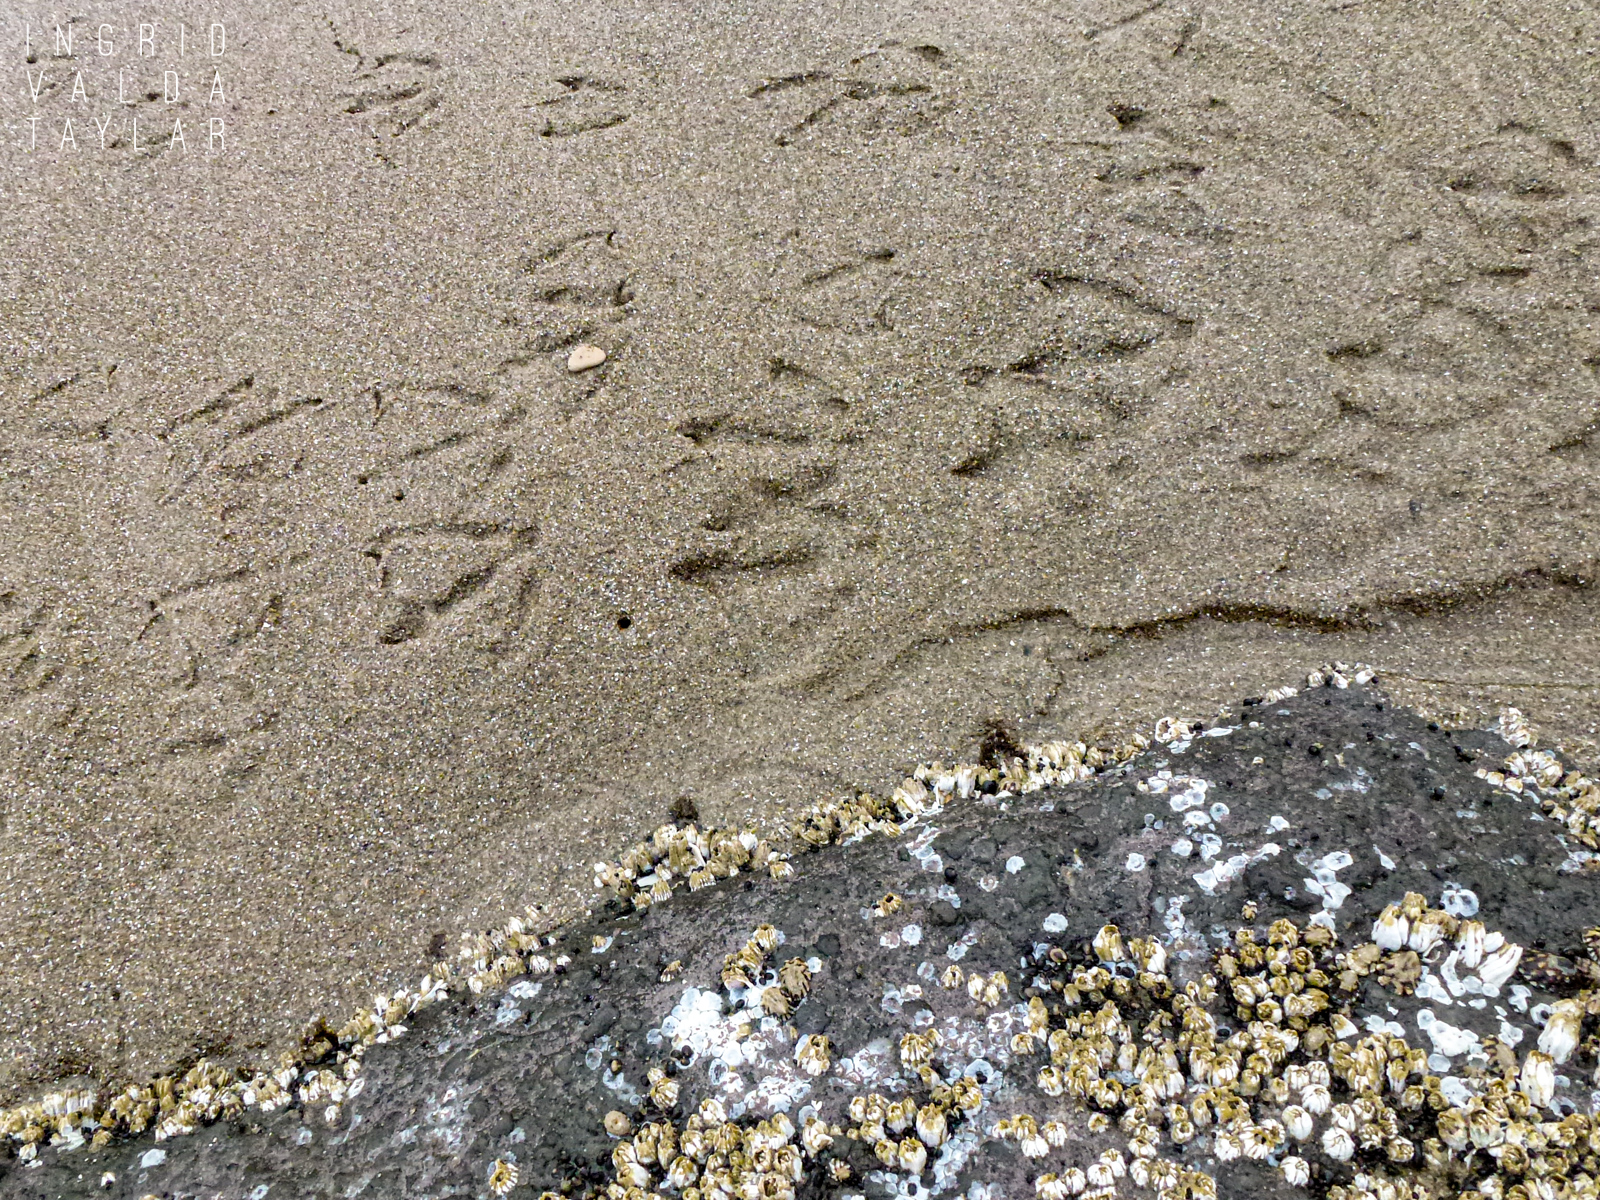 Gull Tracks in the Sand